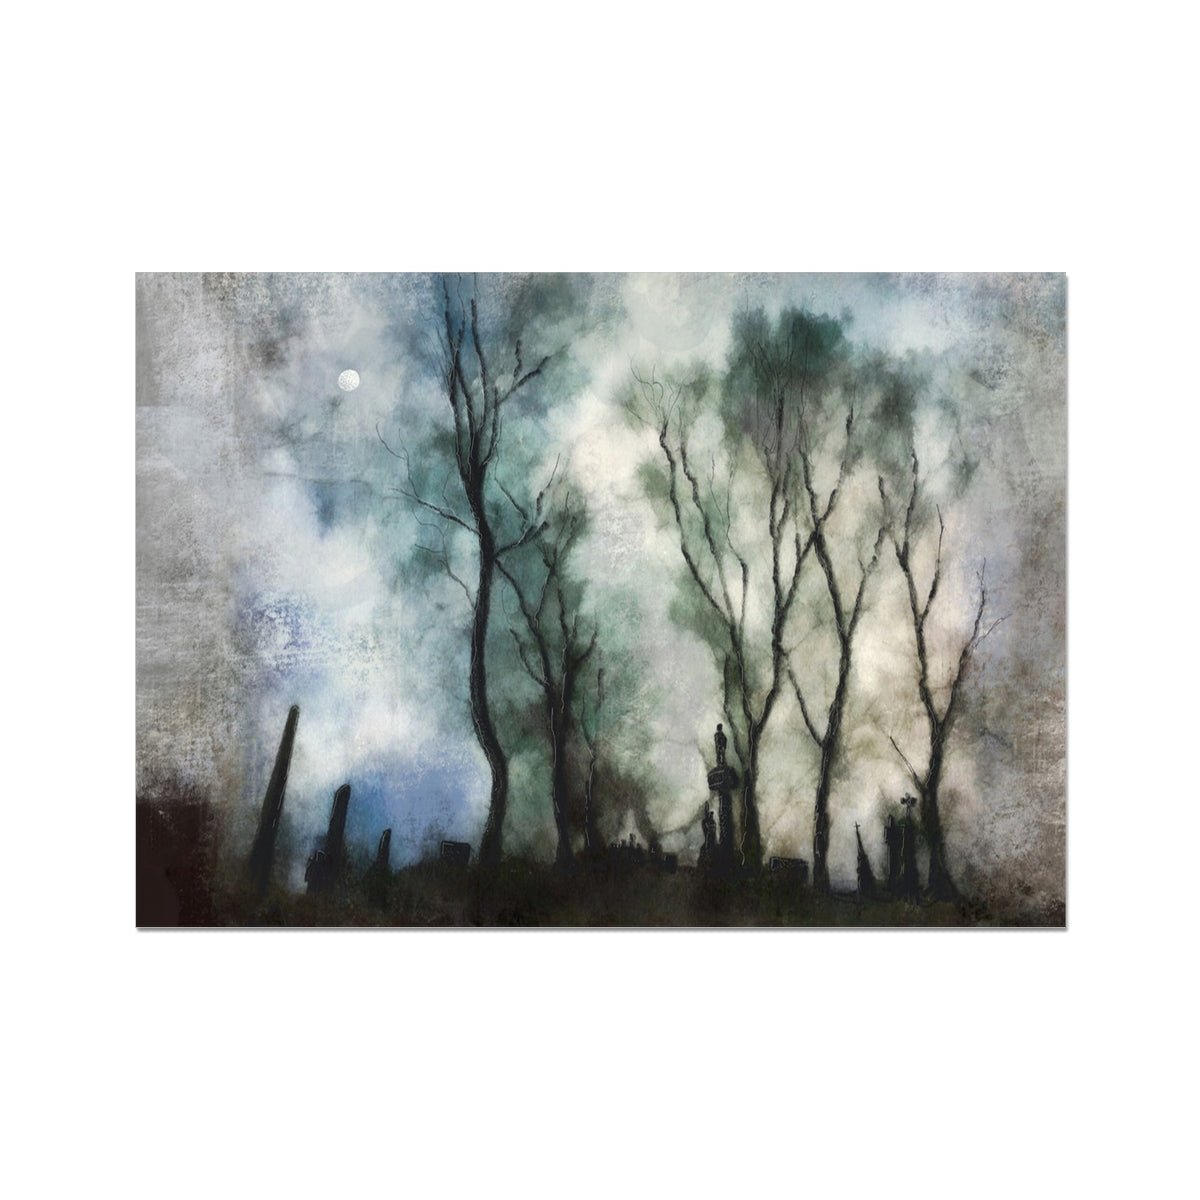 Glasgow Necropolis Moonlight Painting | Fine Art Prints From Scotland-Unframed Prints-Edinburgh & Glasgow Art Gallery-A2 Landscape-Paintings, Prints, Homeware, Art Gifts From Scotland By Scottish Artist Kevin Hunter